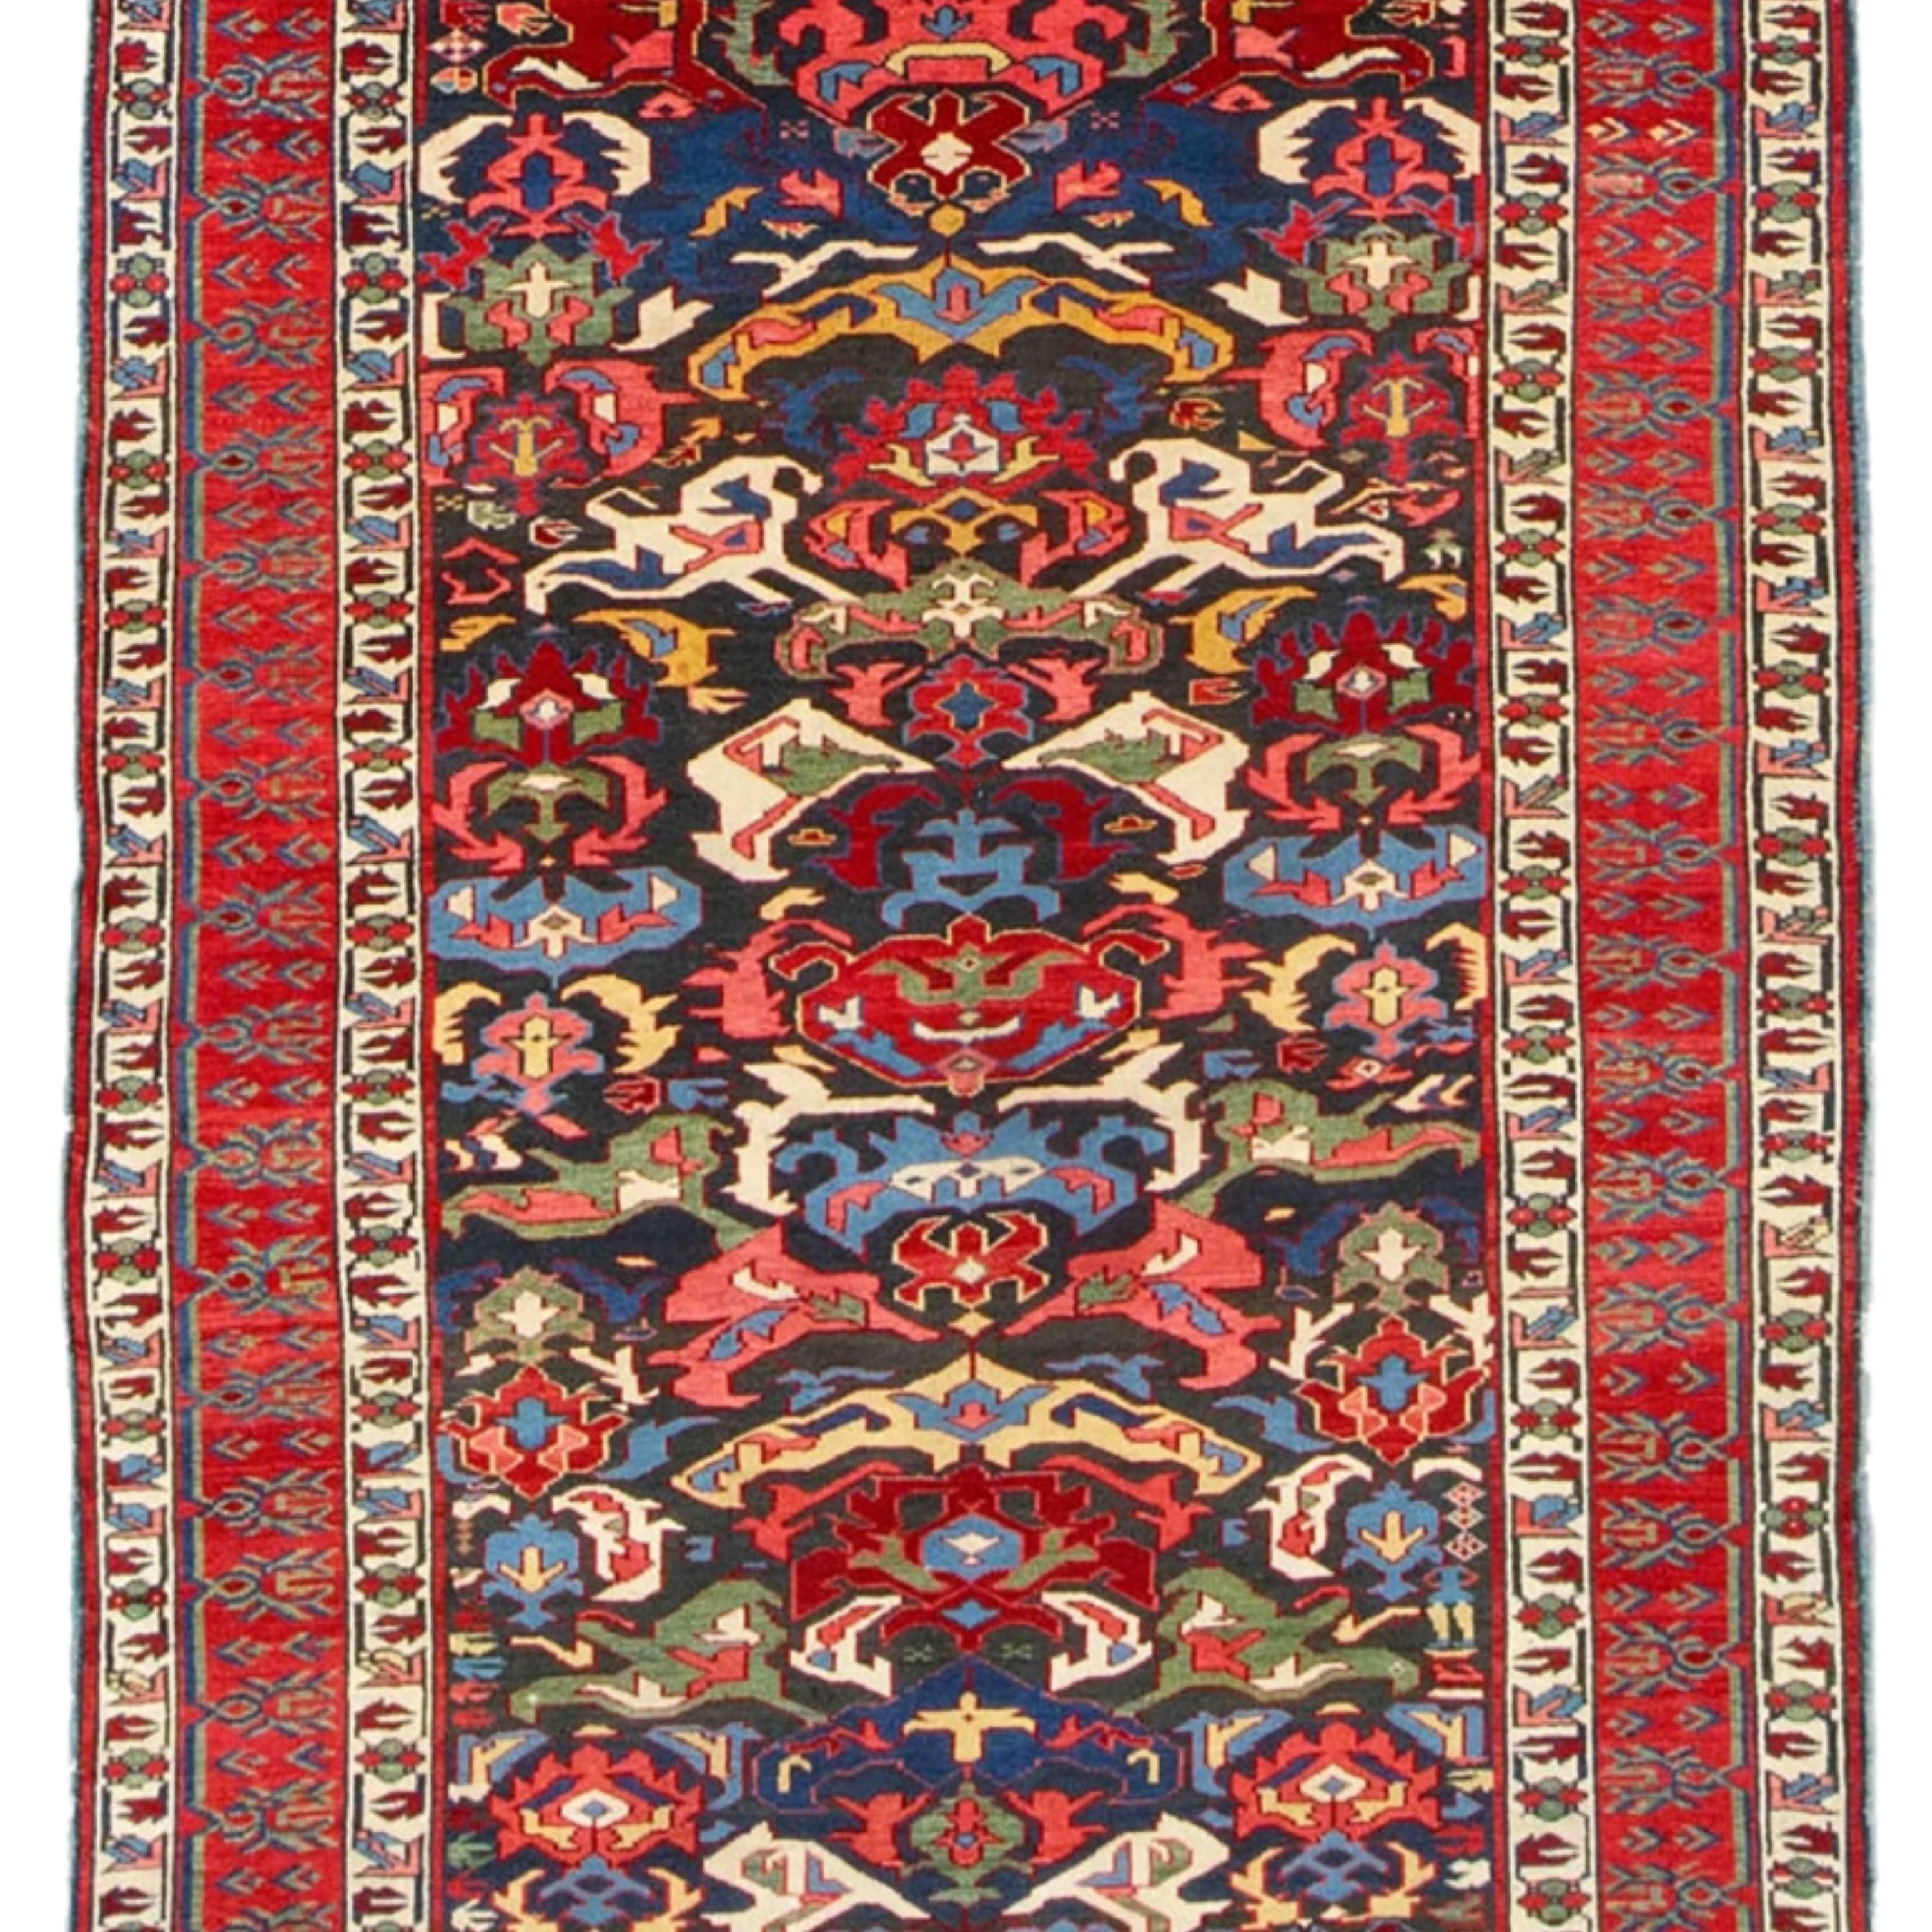 Wool Antique Caucasian Bidjov Rug - Mid-19th Century Bidjov Rug, Antique Rug For Sale